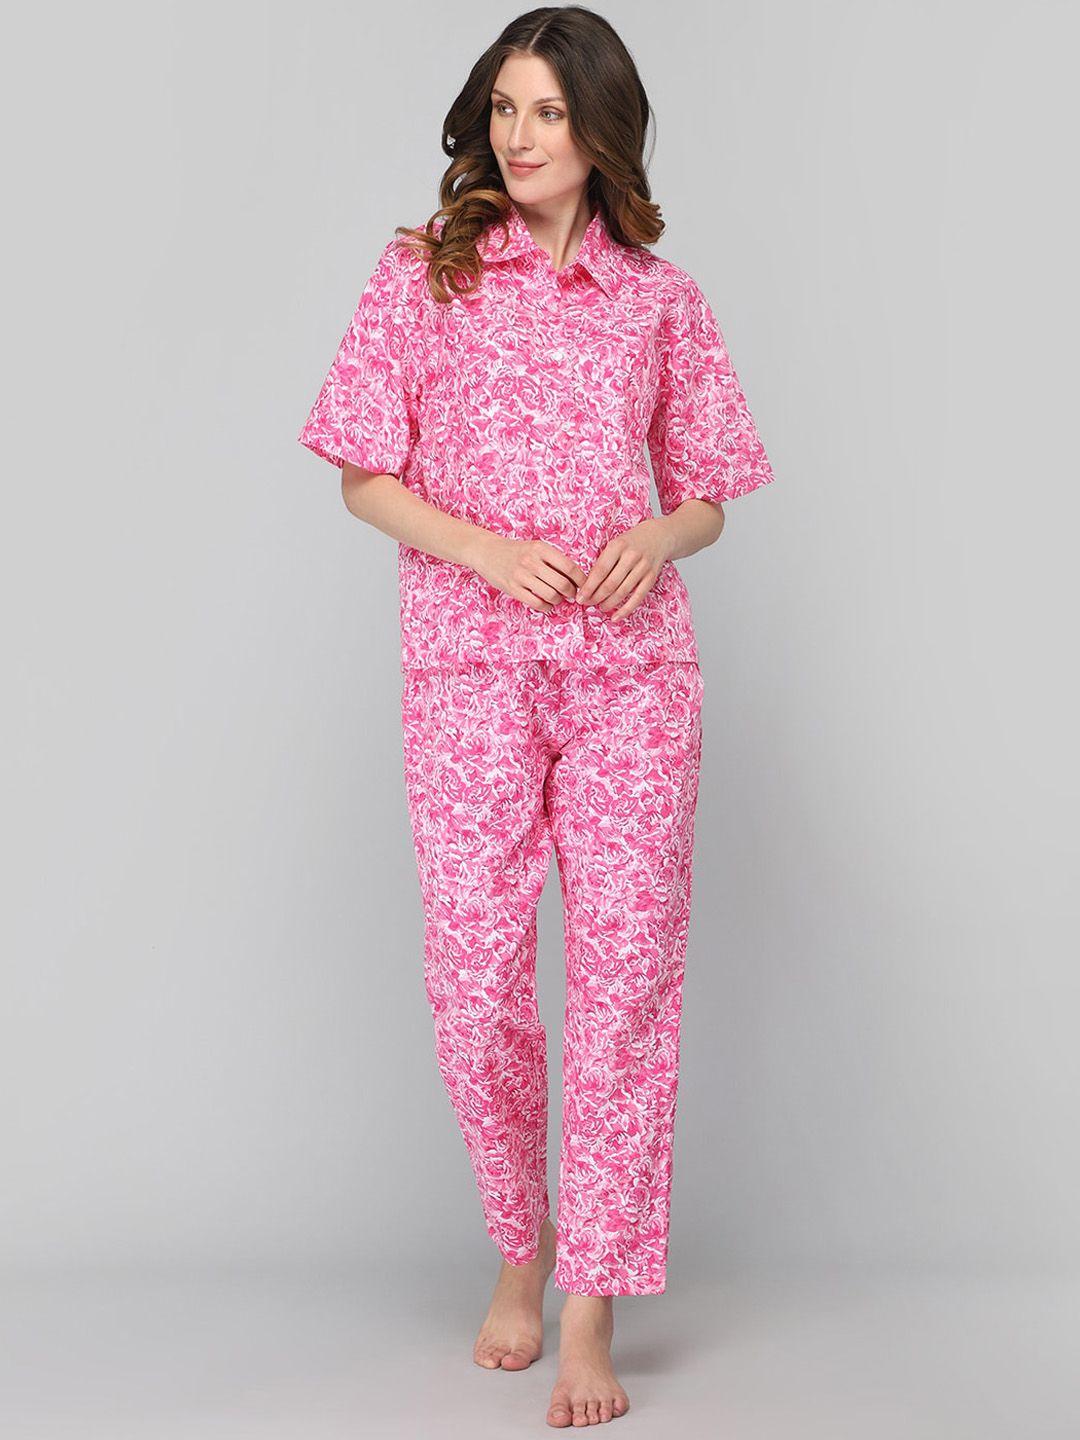 drape-in-vogue-women-pink-printed-night-suit